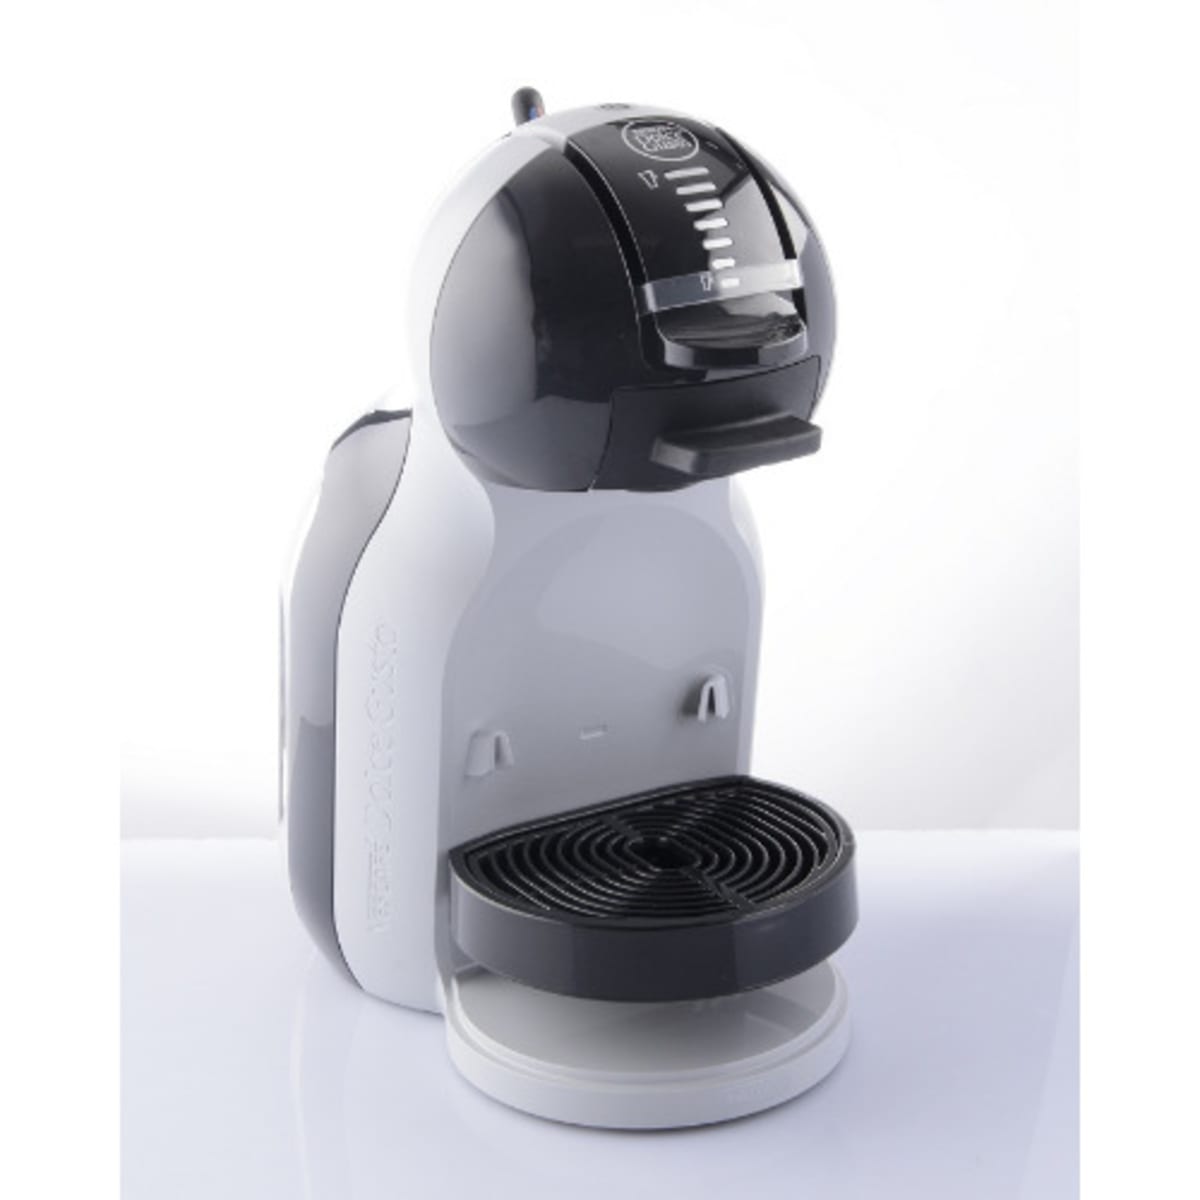 NESCAFÉ Dolce Gusto Coffee Machine Mini Me EDG155.BG